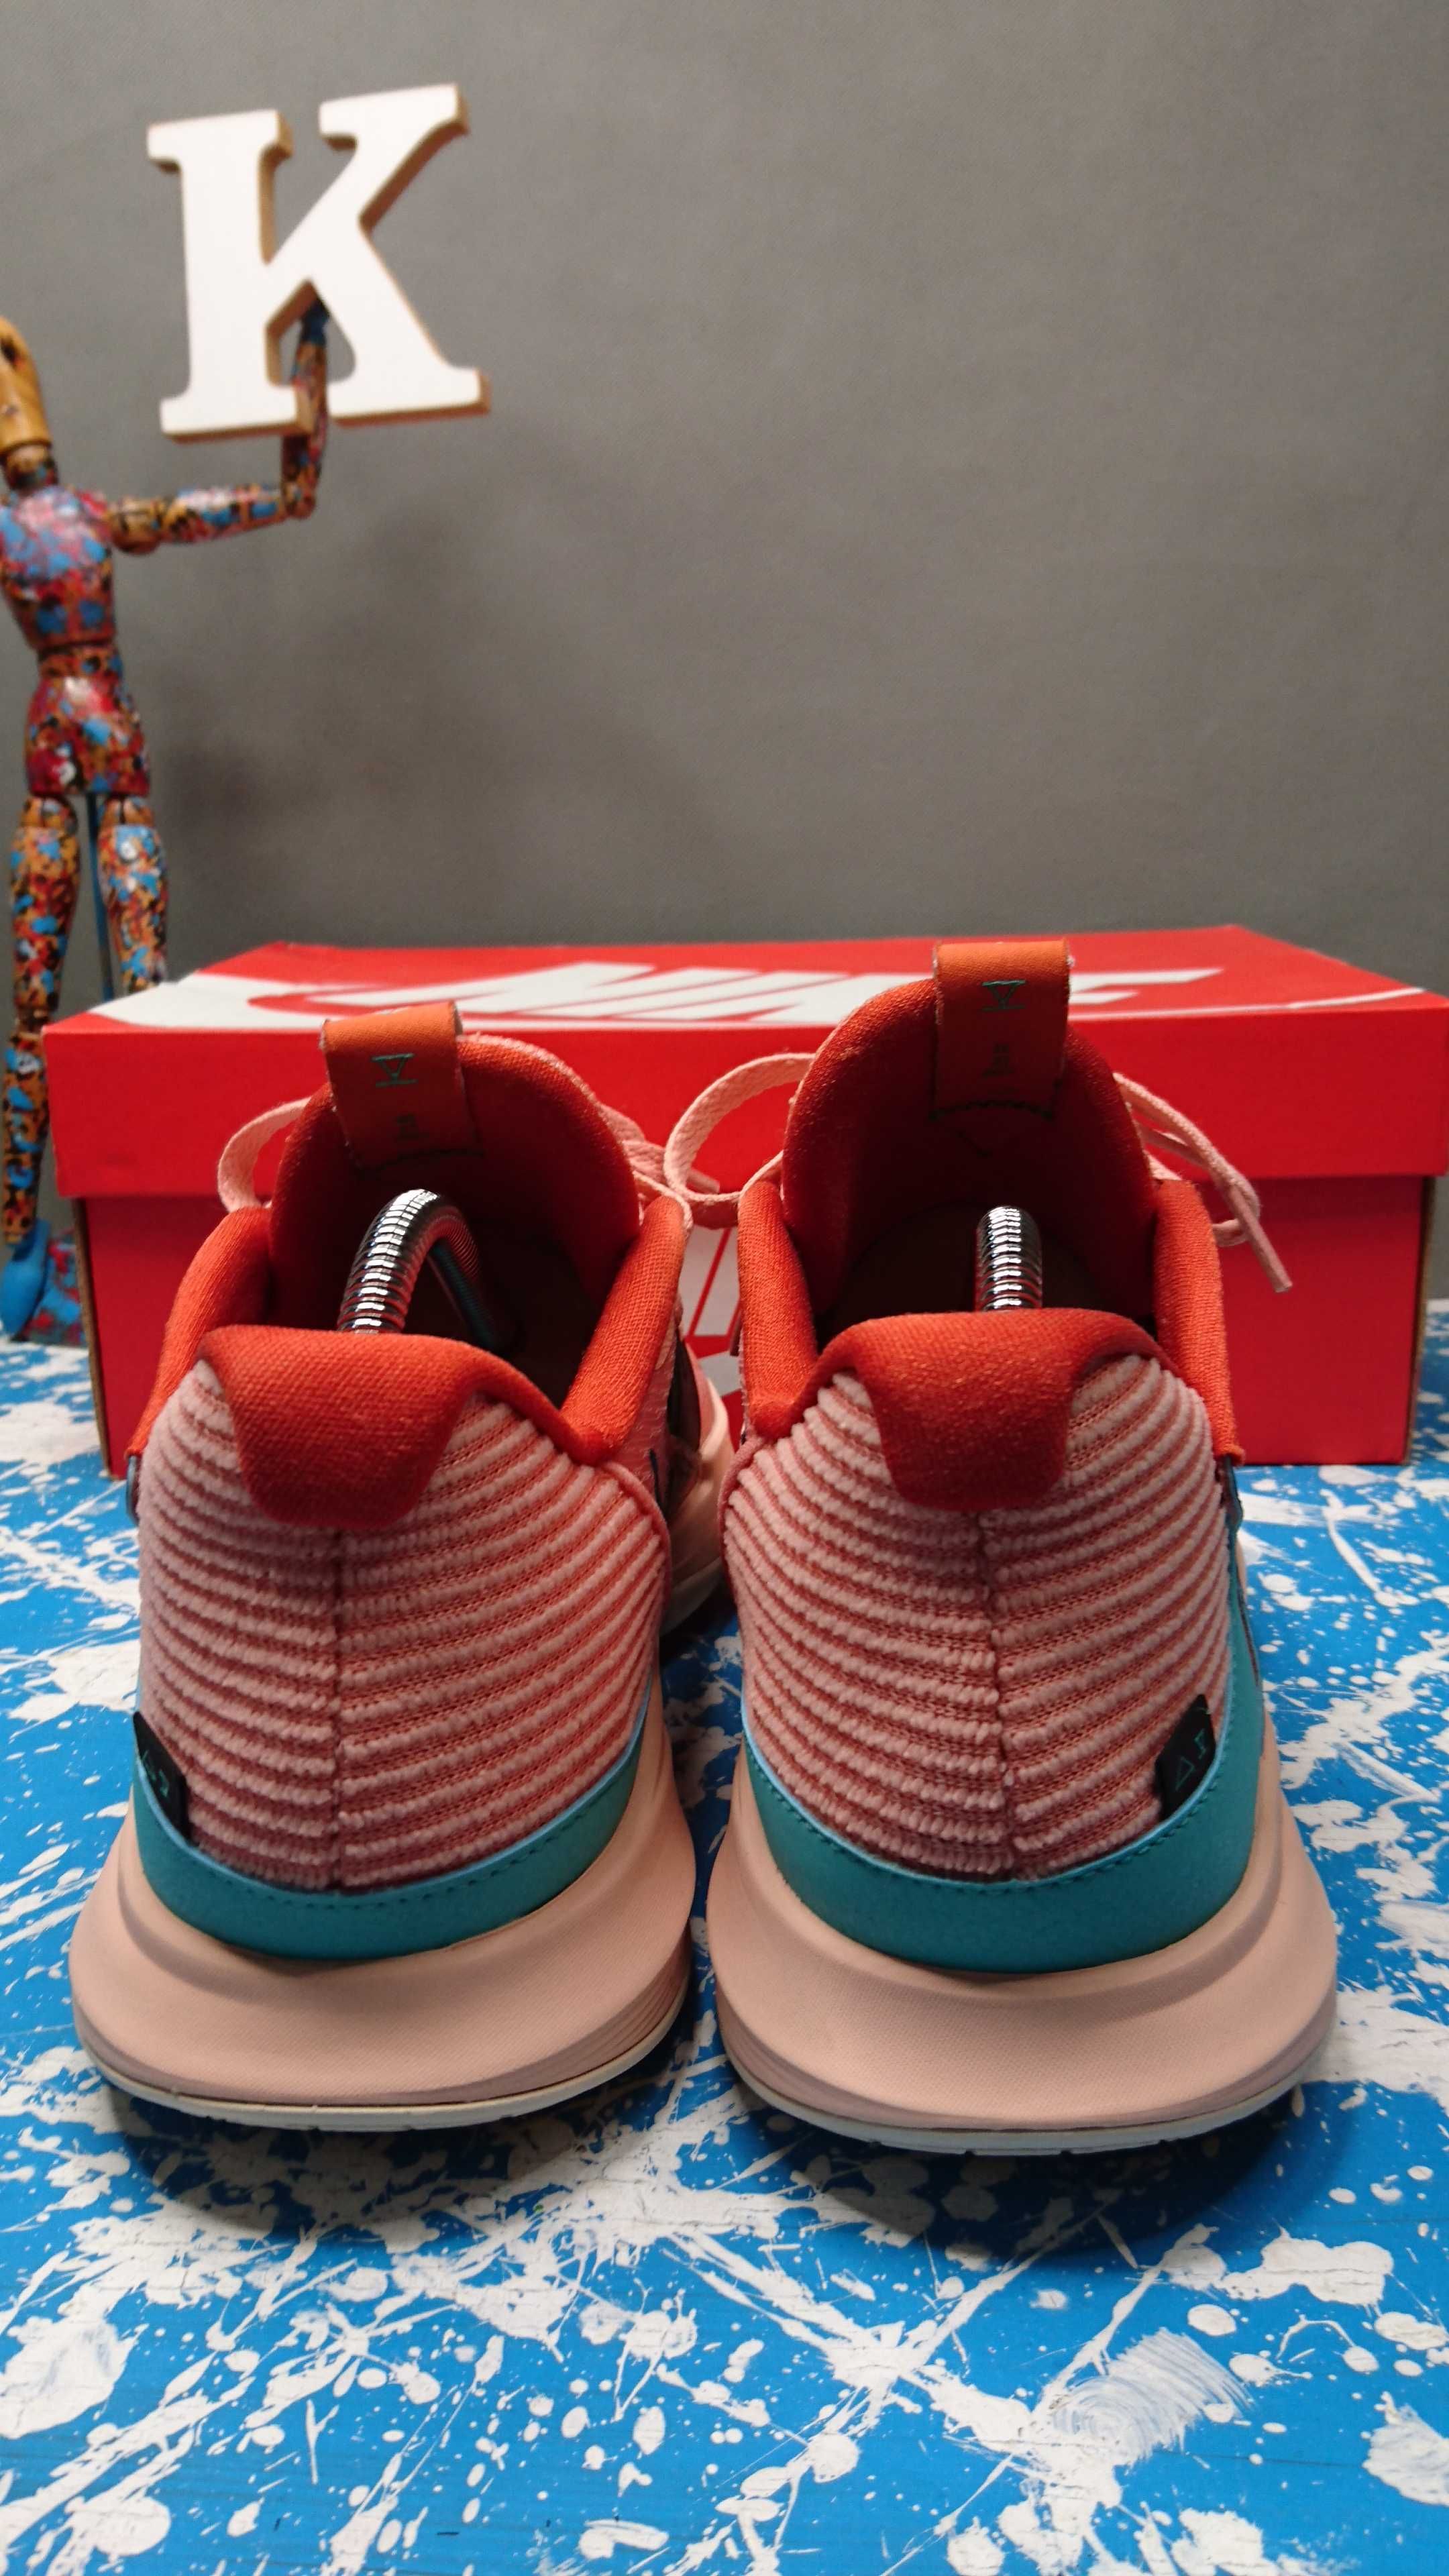 Buty Nike Kyrie 5 Low Terracotta Teal R.42